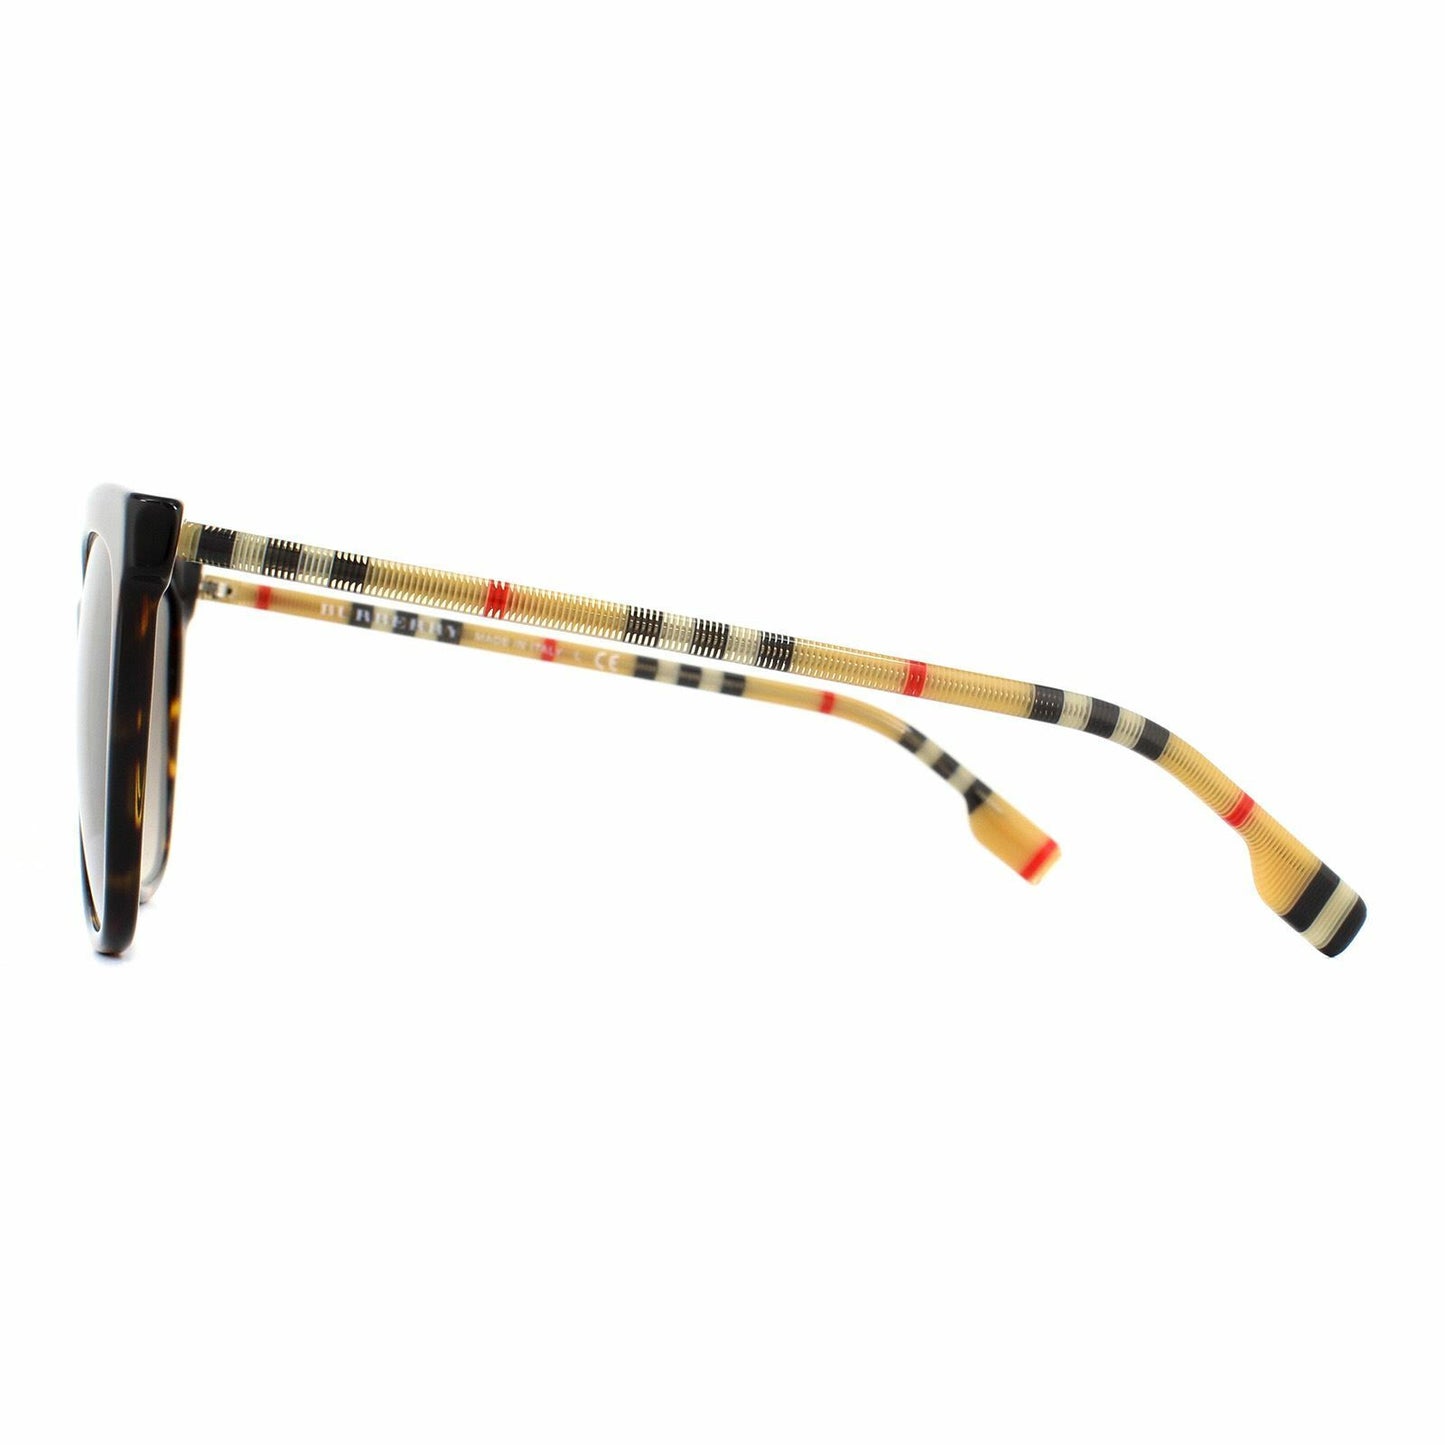 Burberry BE4308-385413-56 56mm New Sunglasses